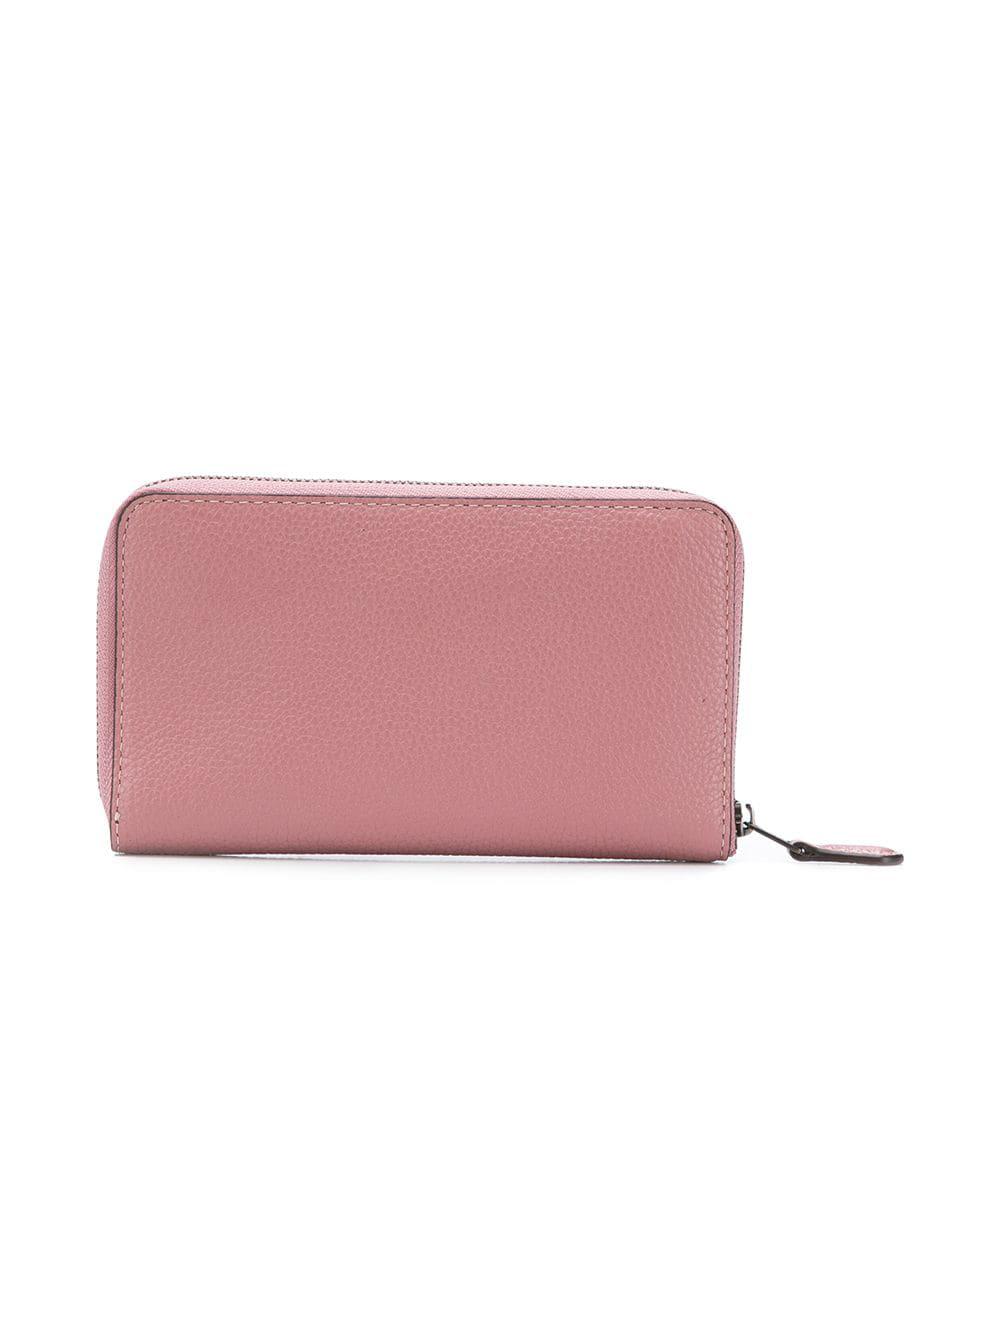 COACH Leather Hearts Medium Zip Wallet in Pink & Purple (Pink) | Lyst